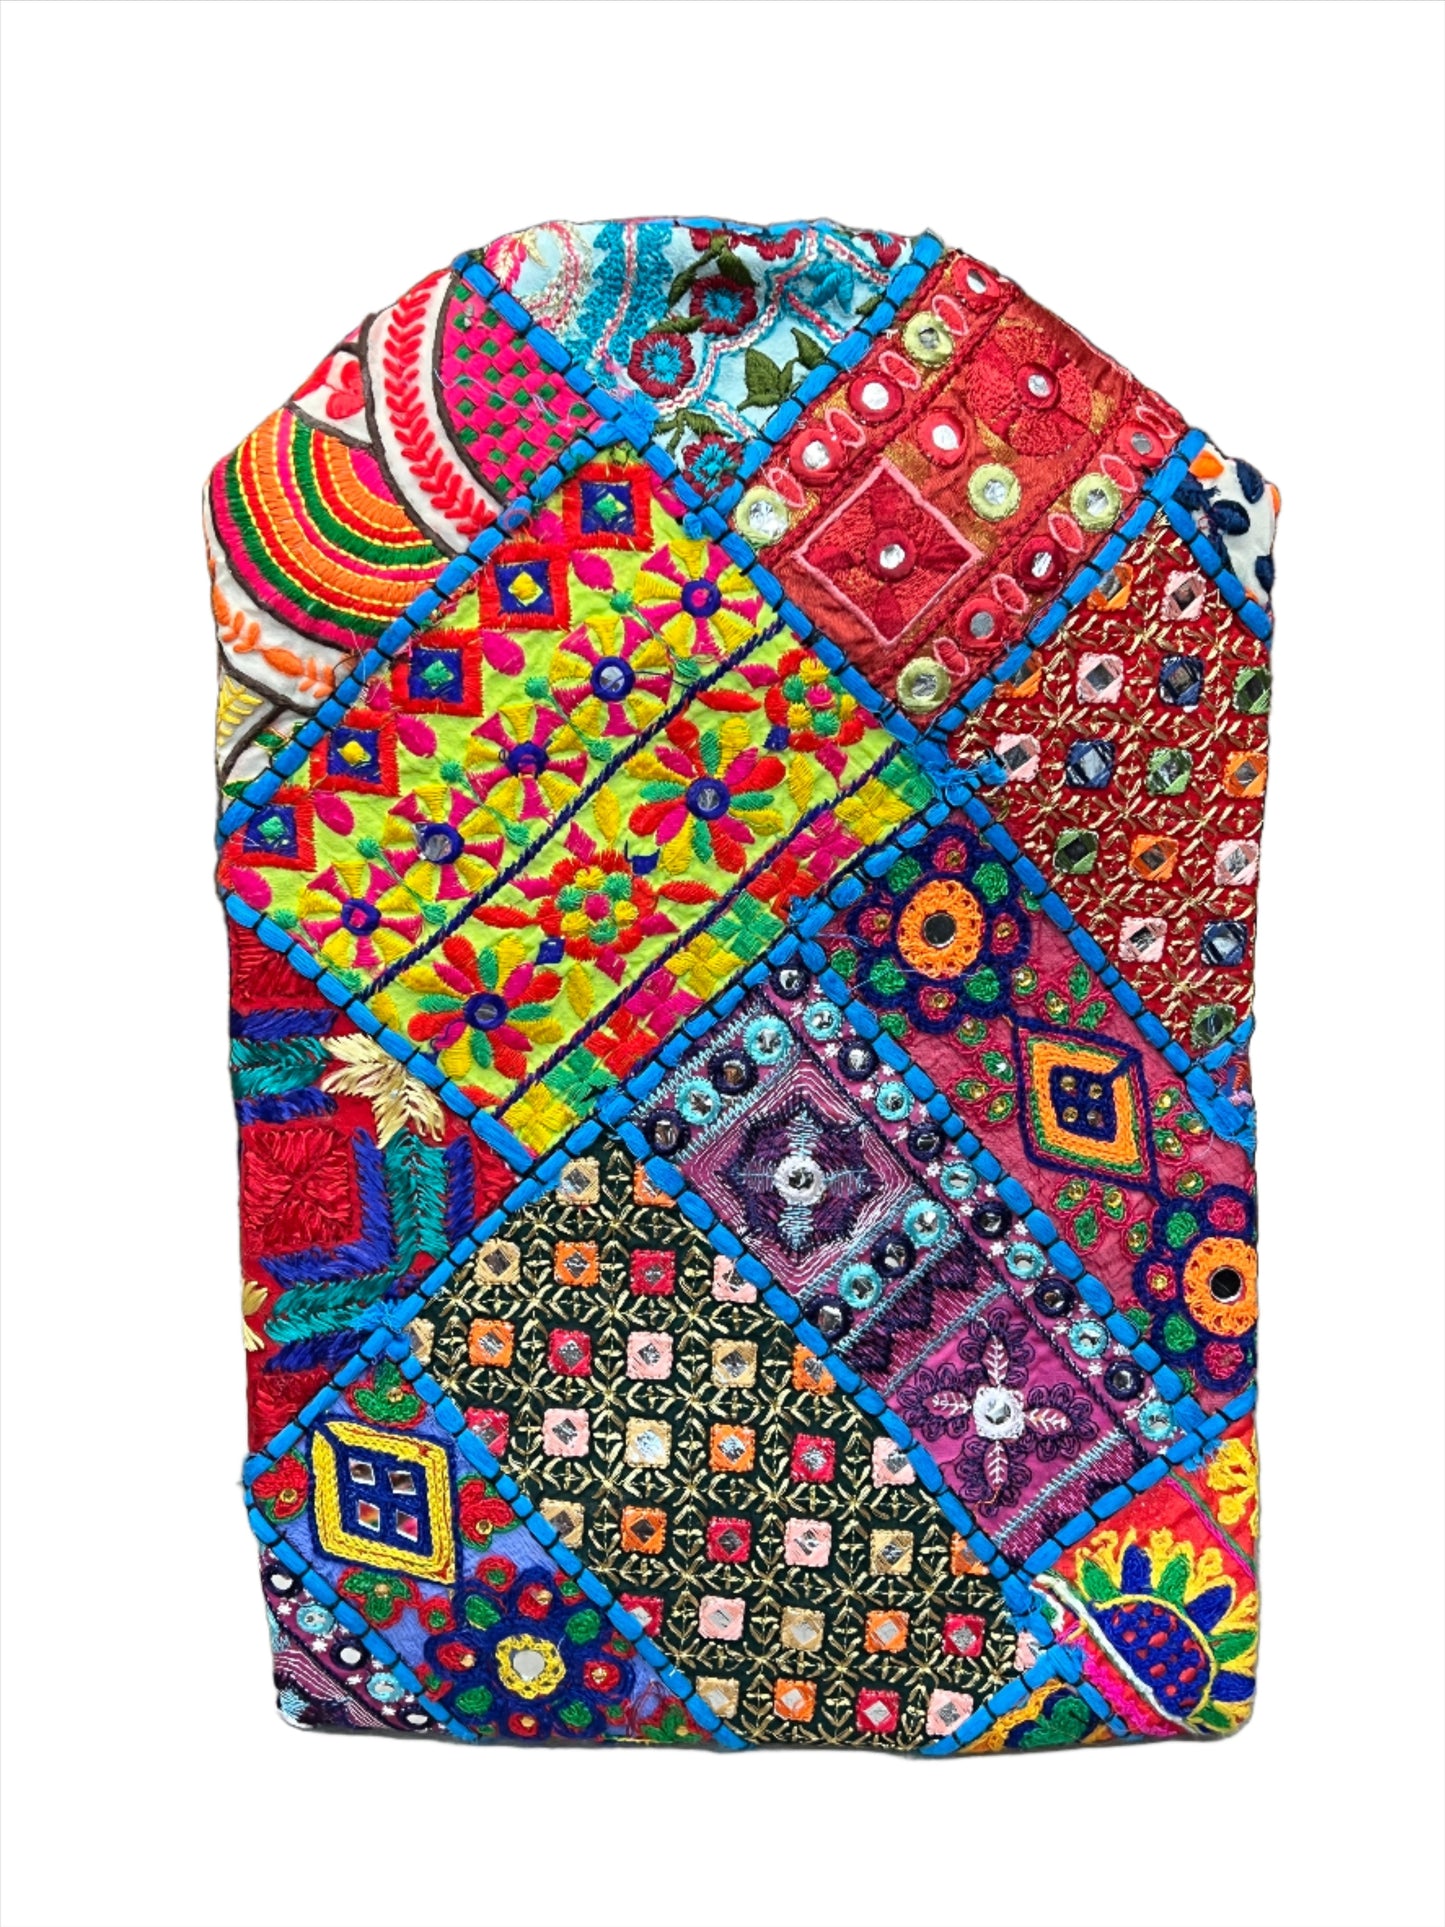 Rajasthani Embroidery Patchwork Yoga Bag